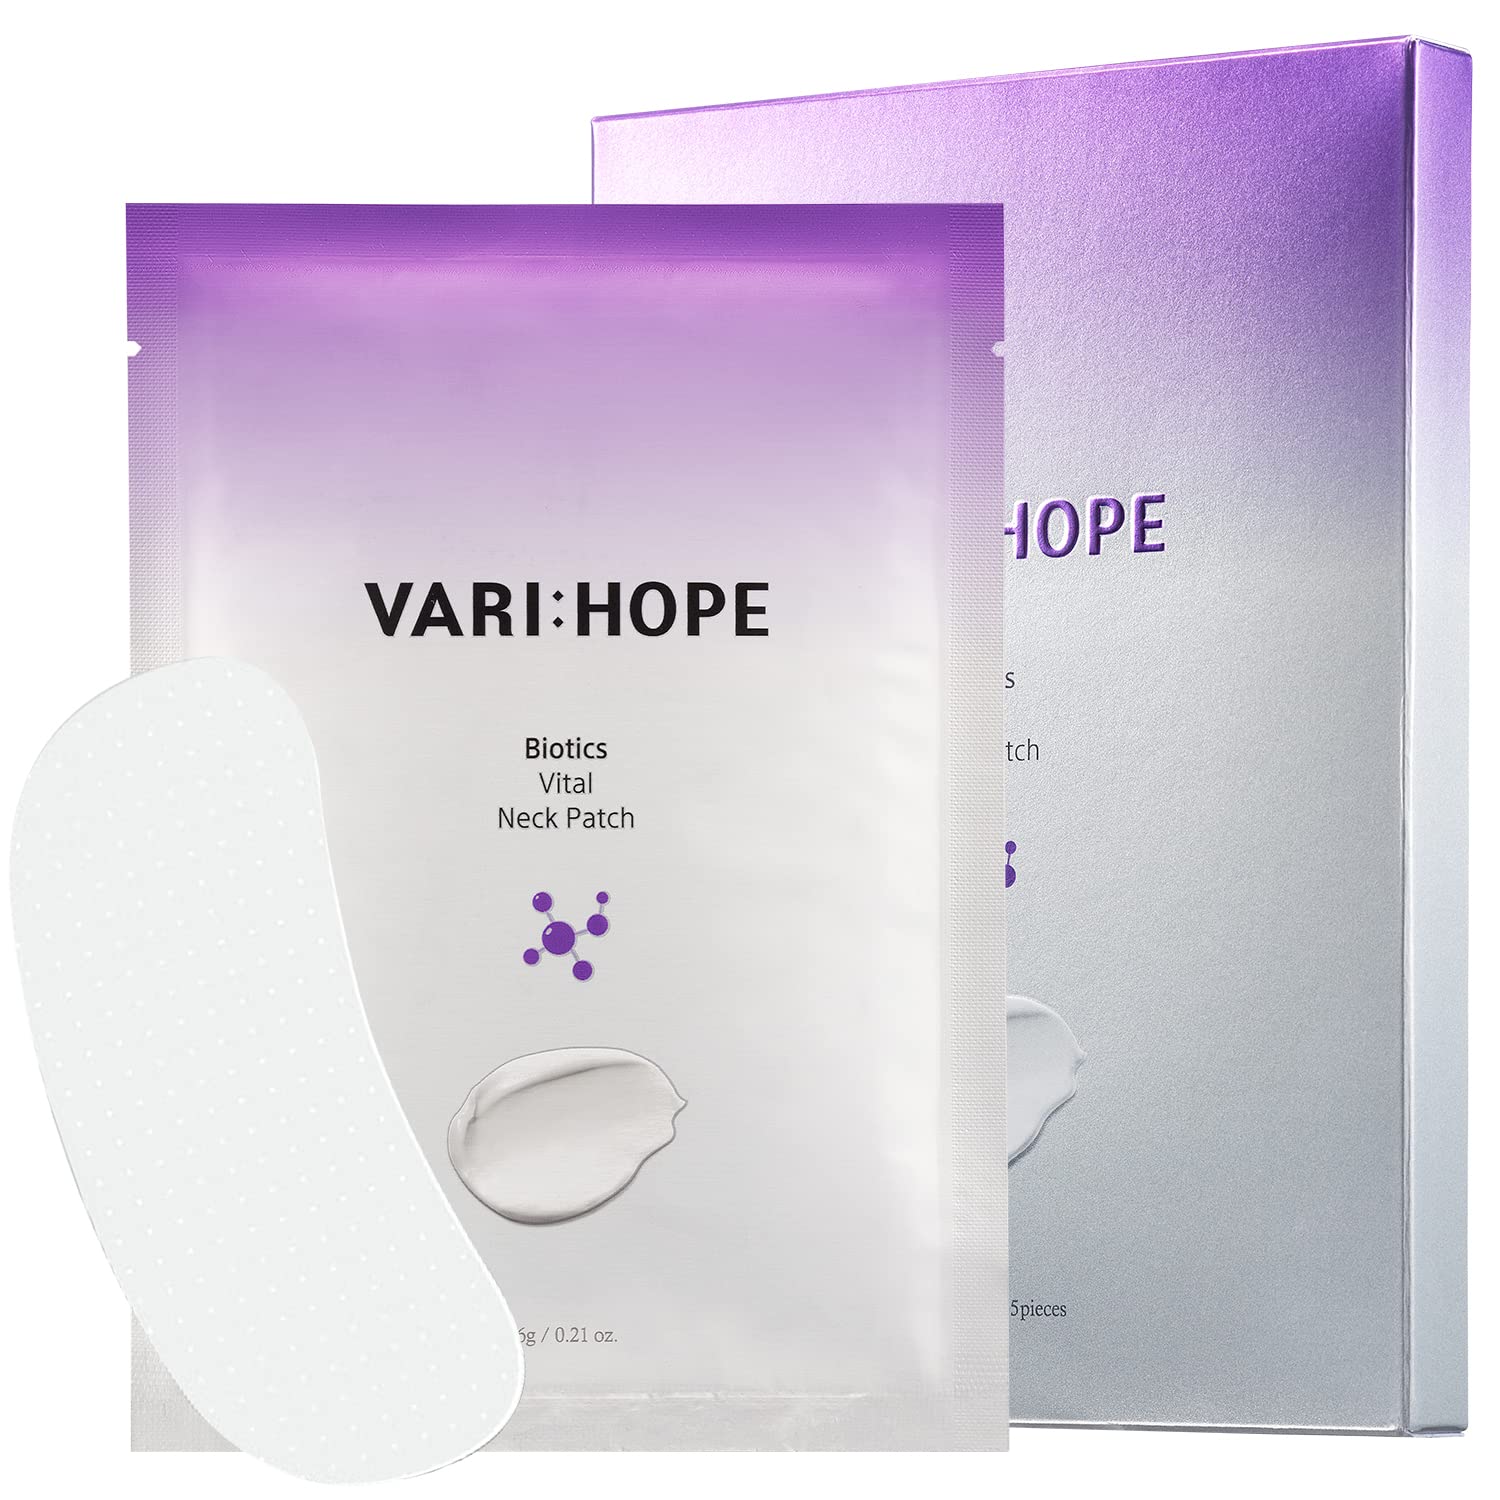 VARIHOPE Biotics Vital Neck Patch 86g